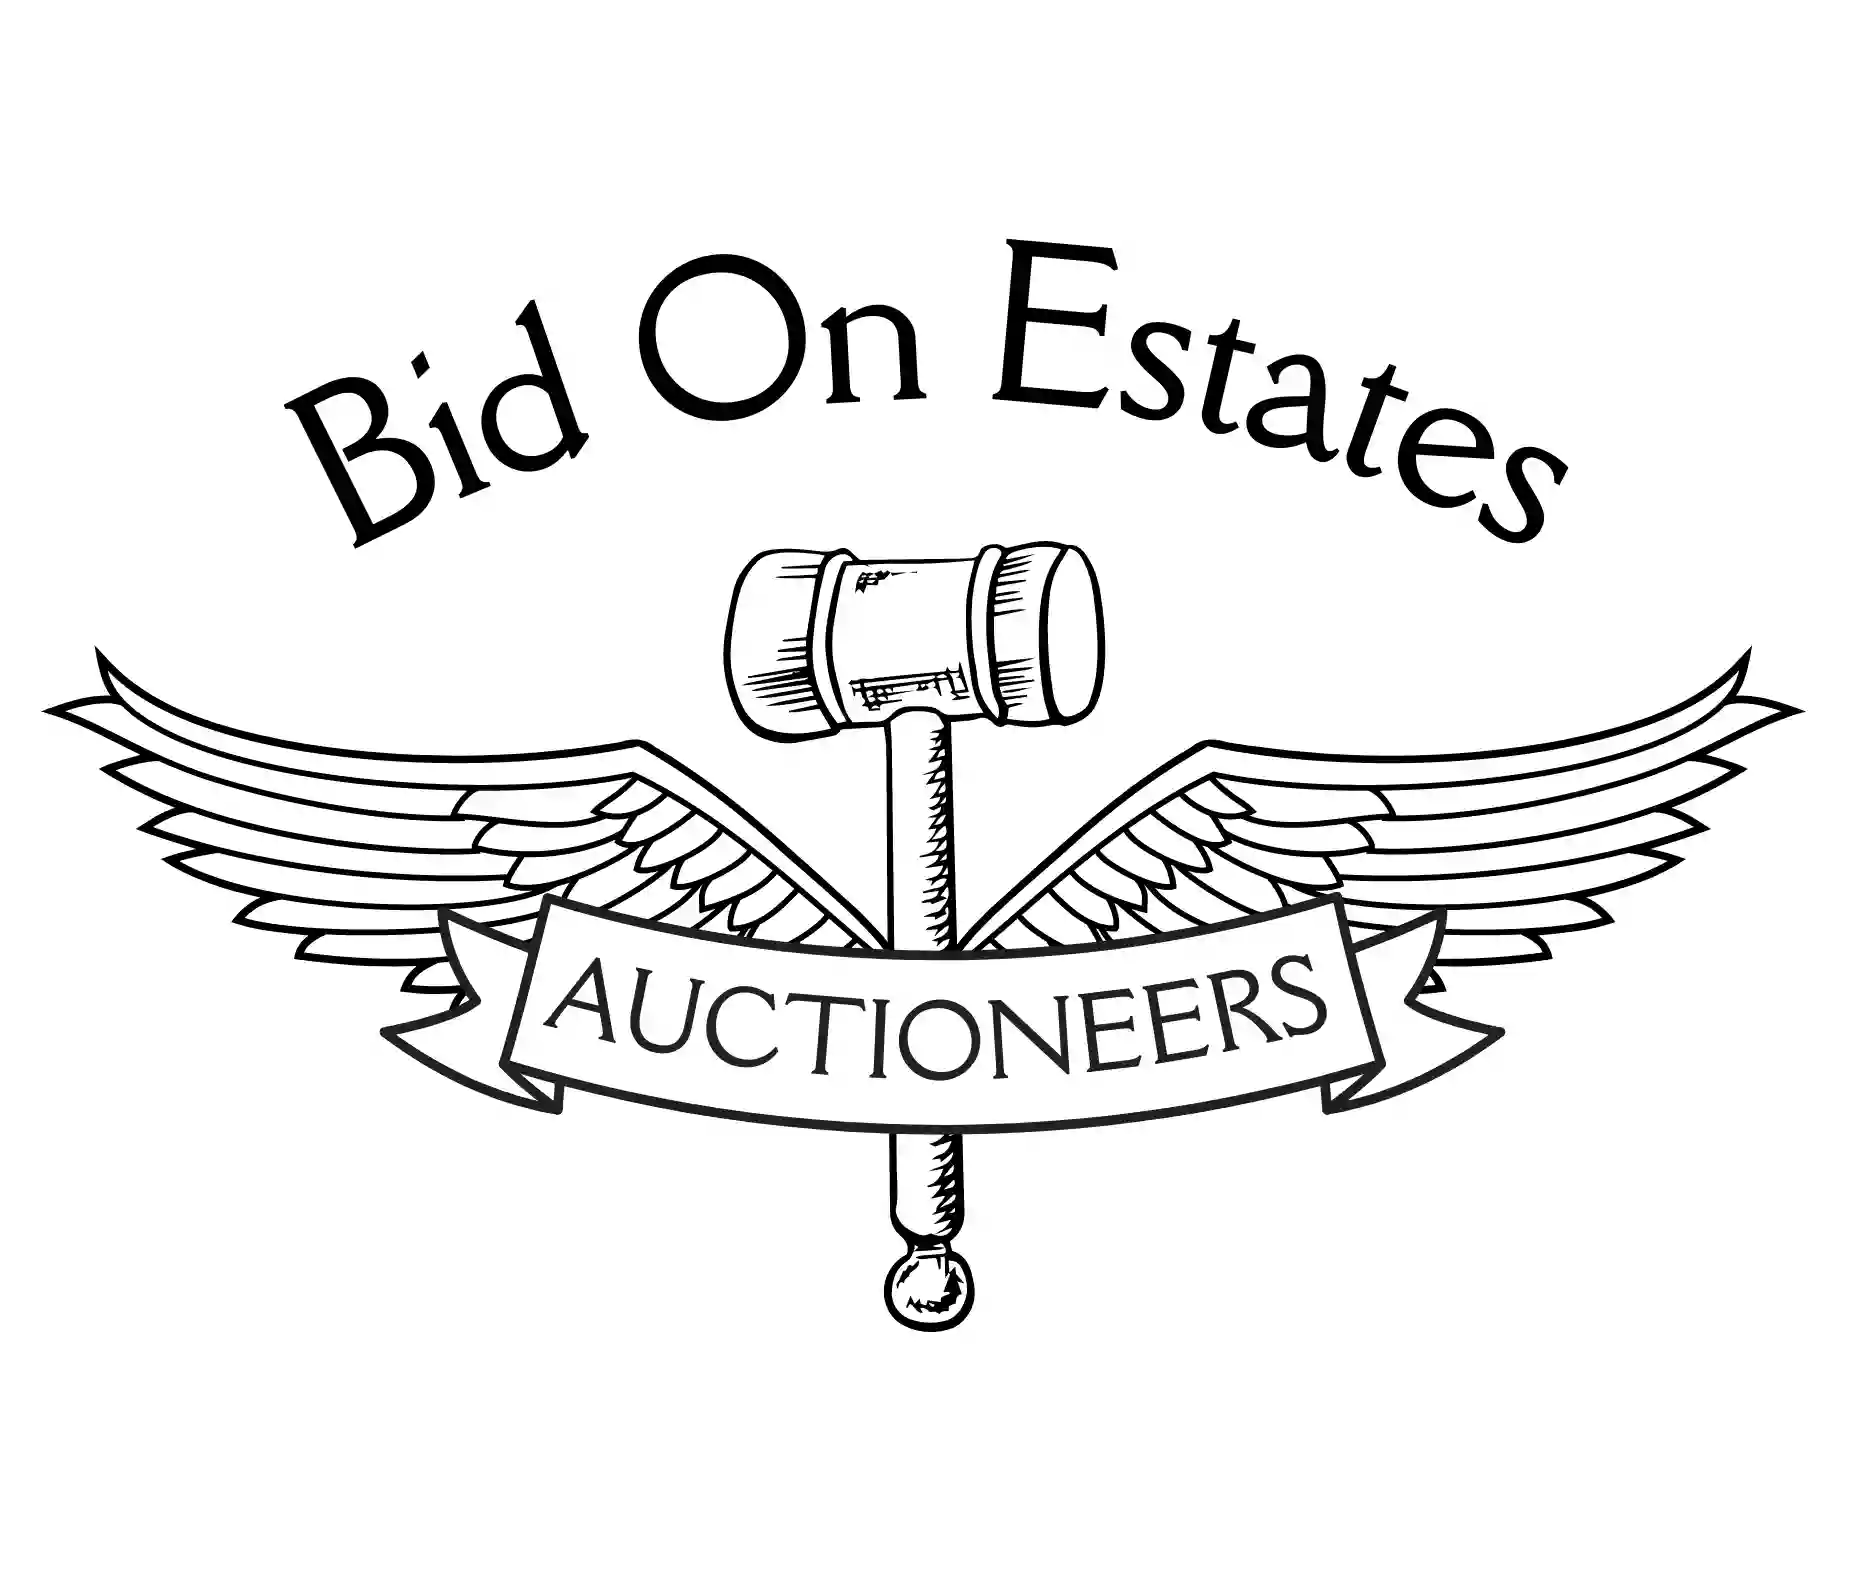 Bid On Estates Auction Services